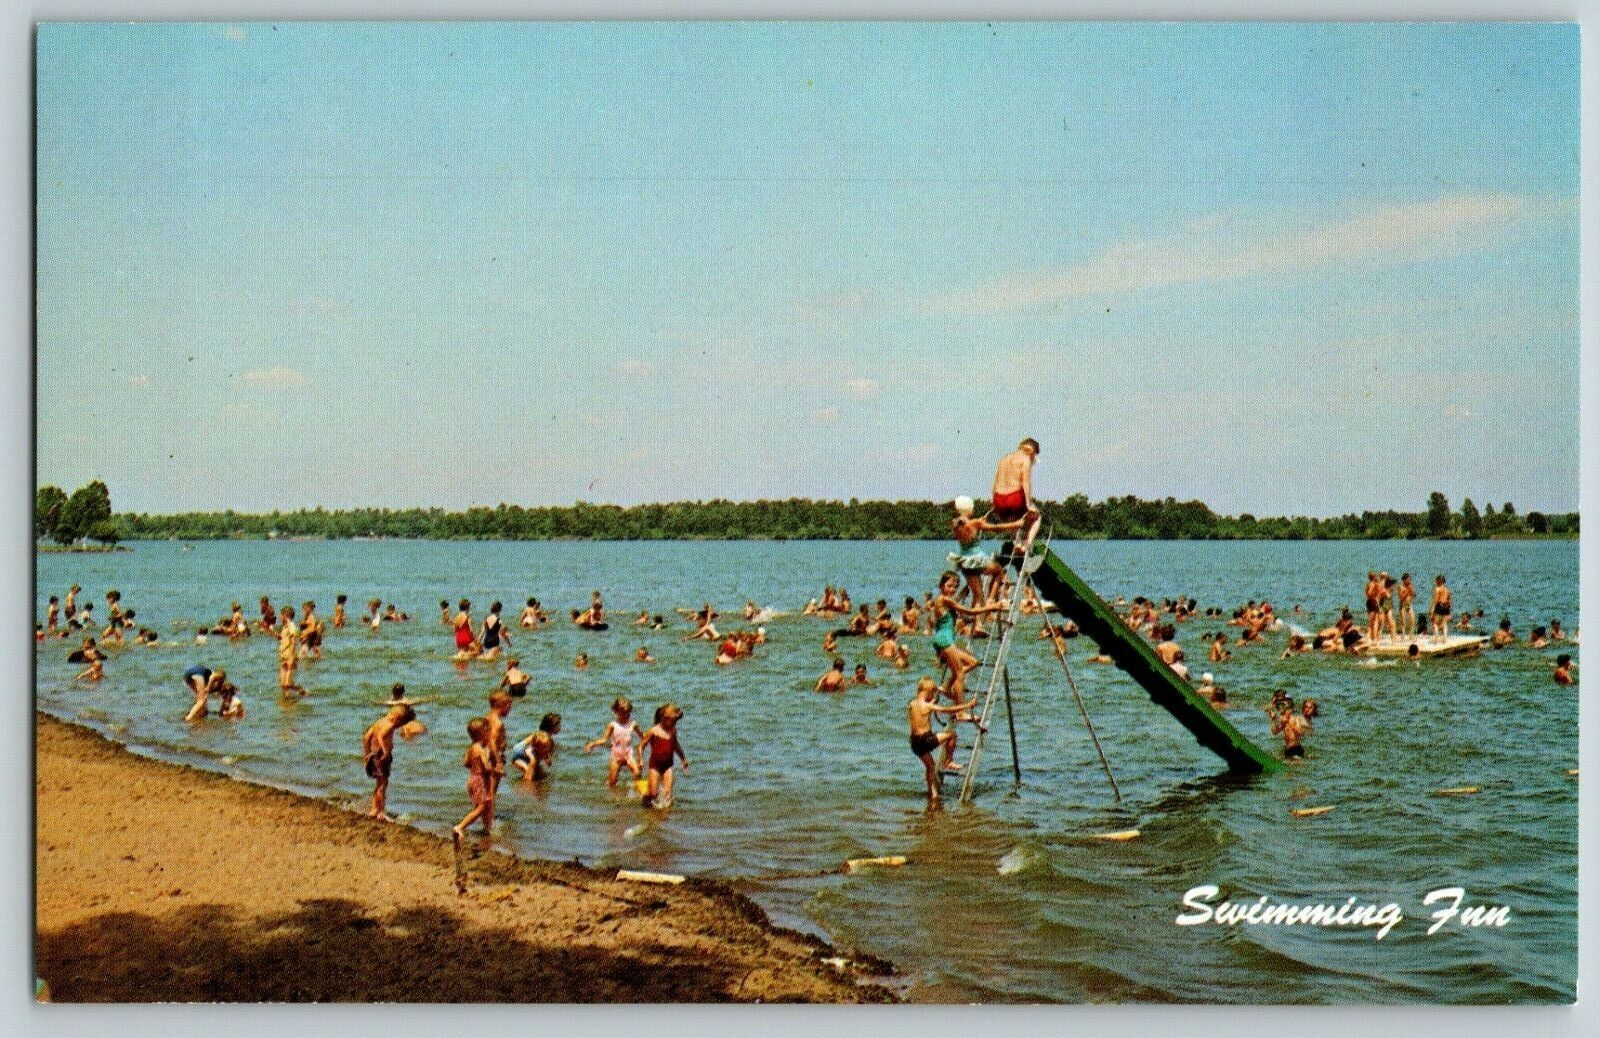 SCENE OF FAMILIES SWIMMING IN A LAKE SWIM SLIDE VTG POSTCARD